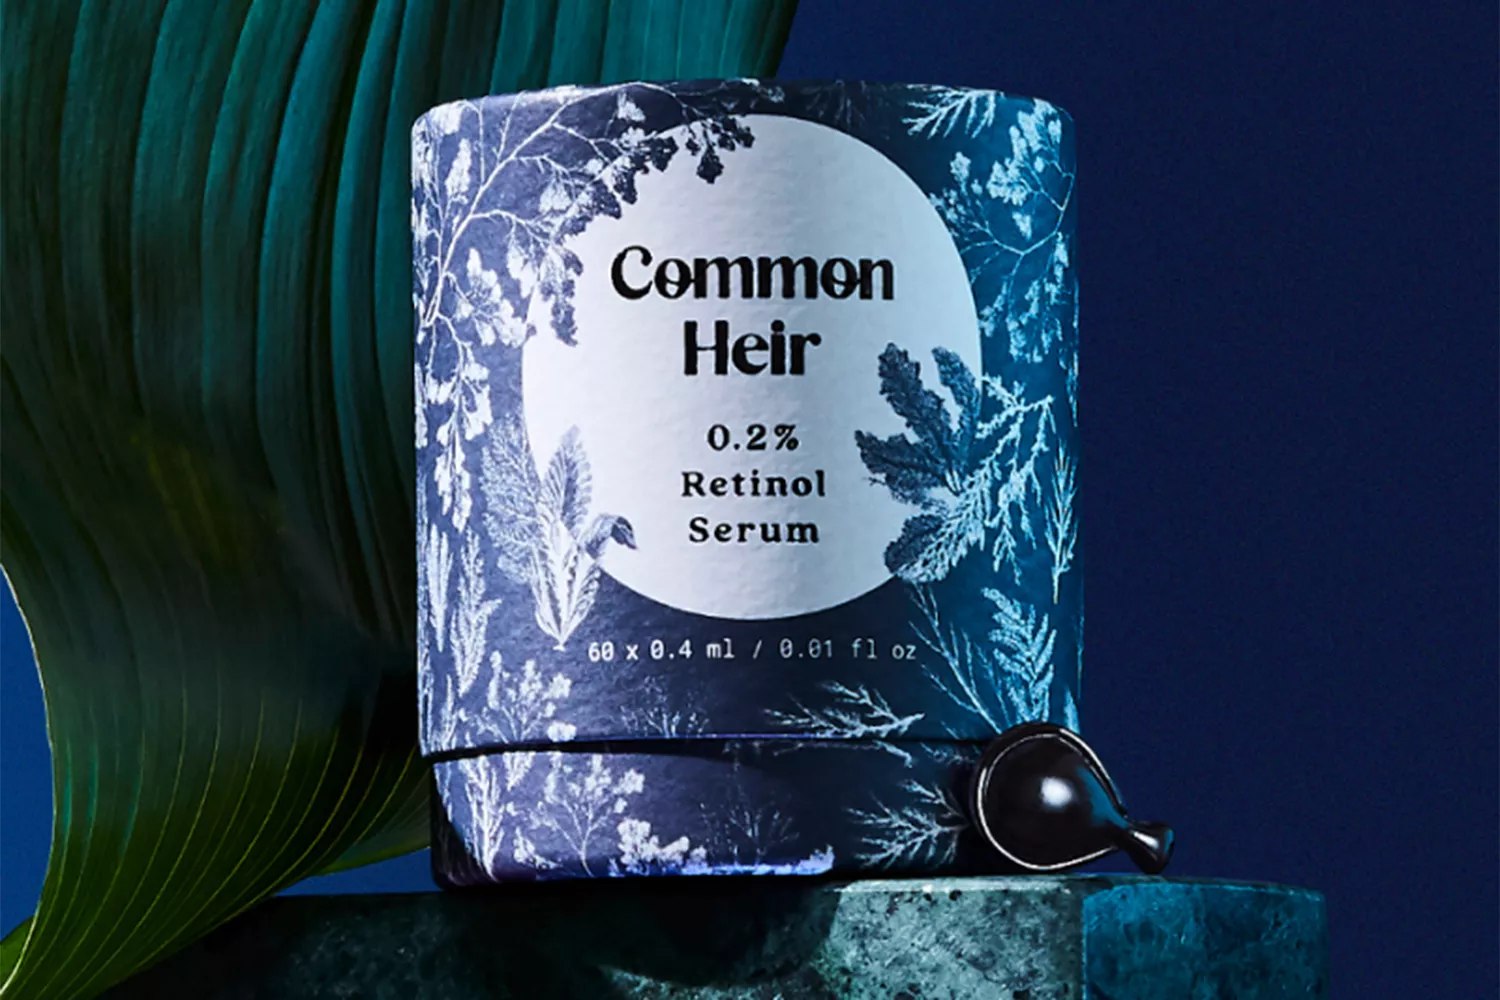 Common Heir Retinol Serum